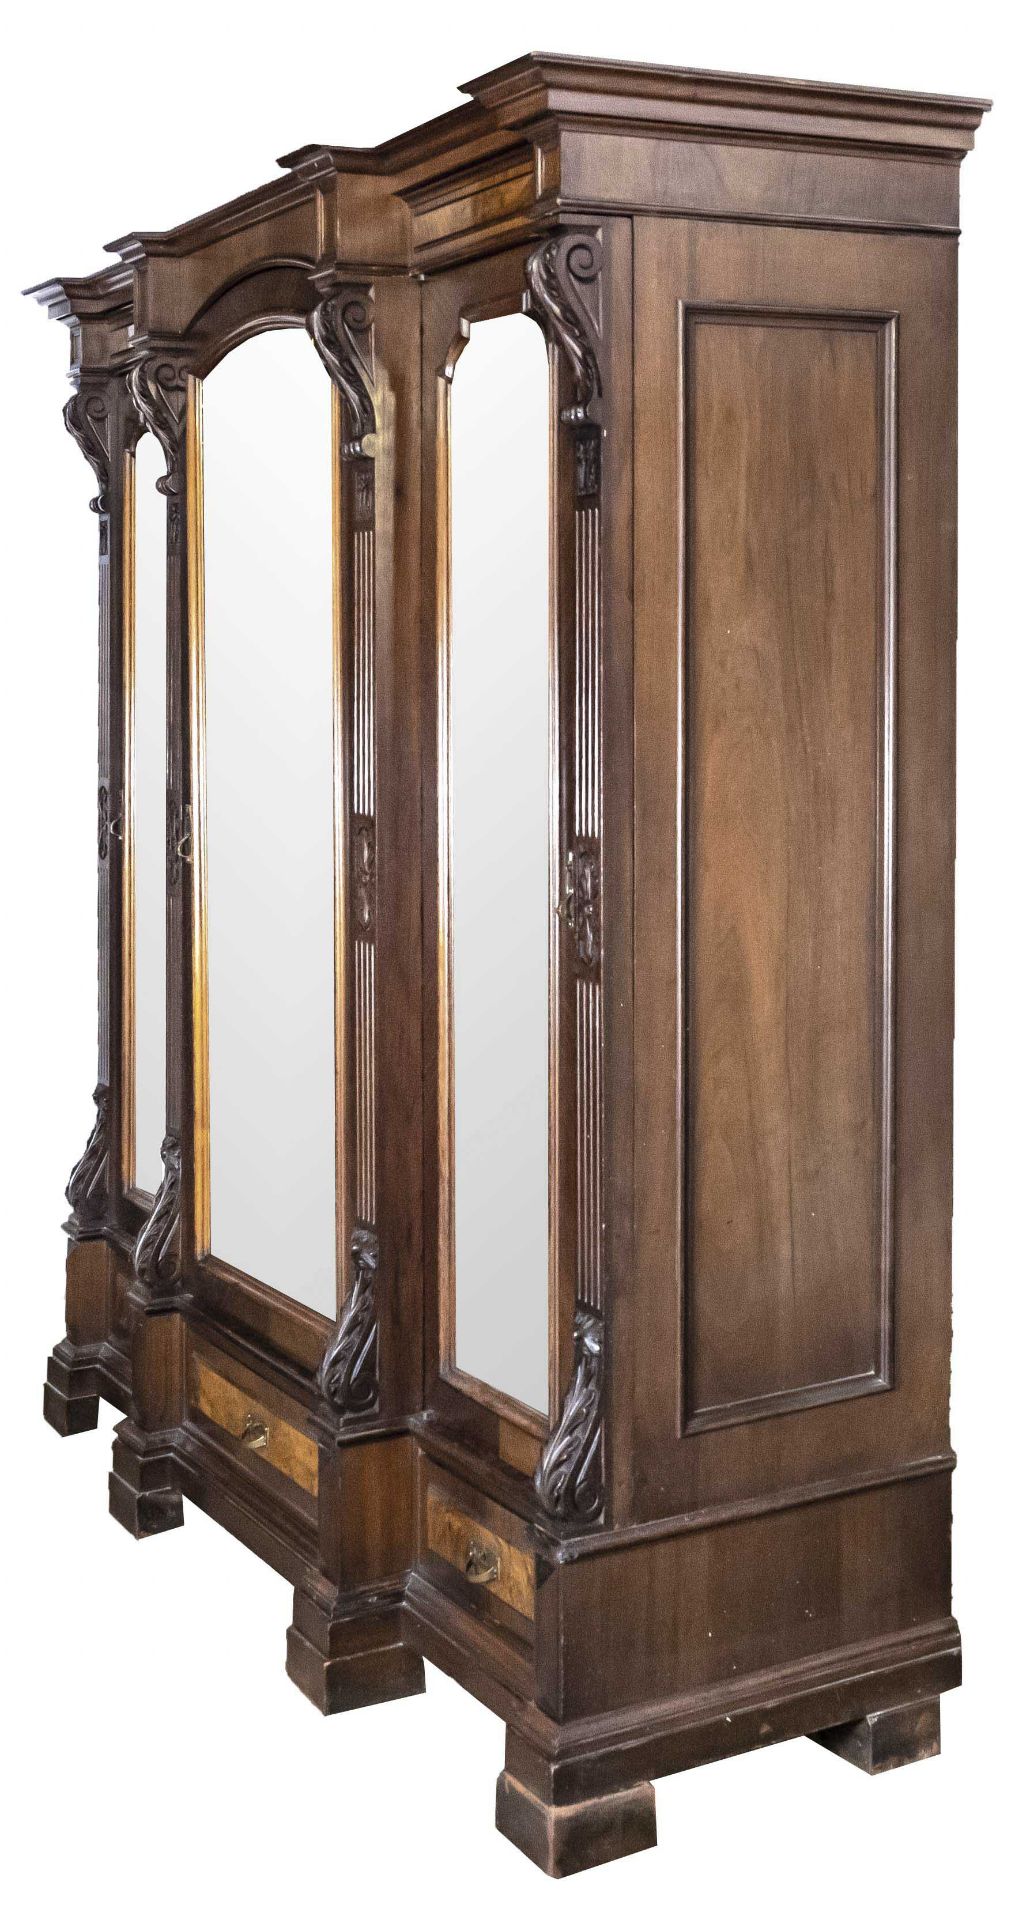 Wilhelminian style closet from around 1880, walnut veneered, 3-door mirrored body, coffered sides, - Image 2 of 2